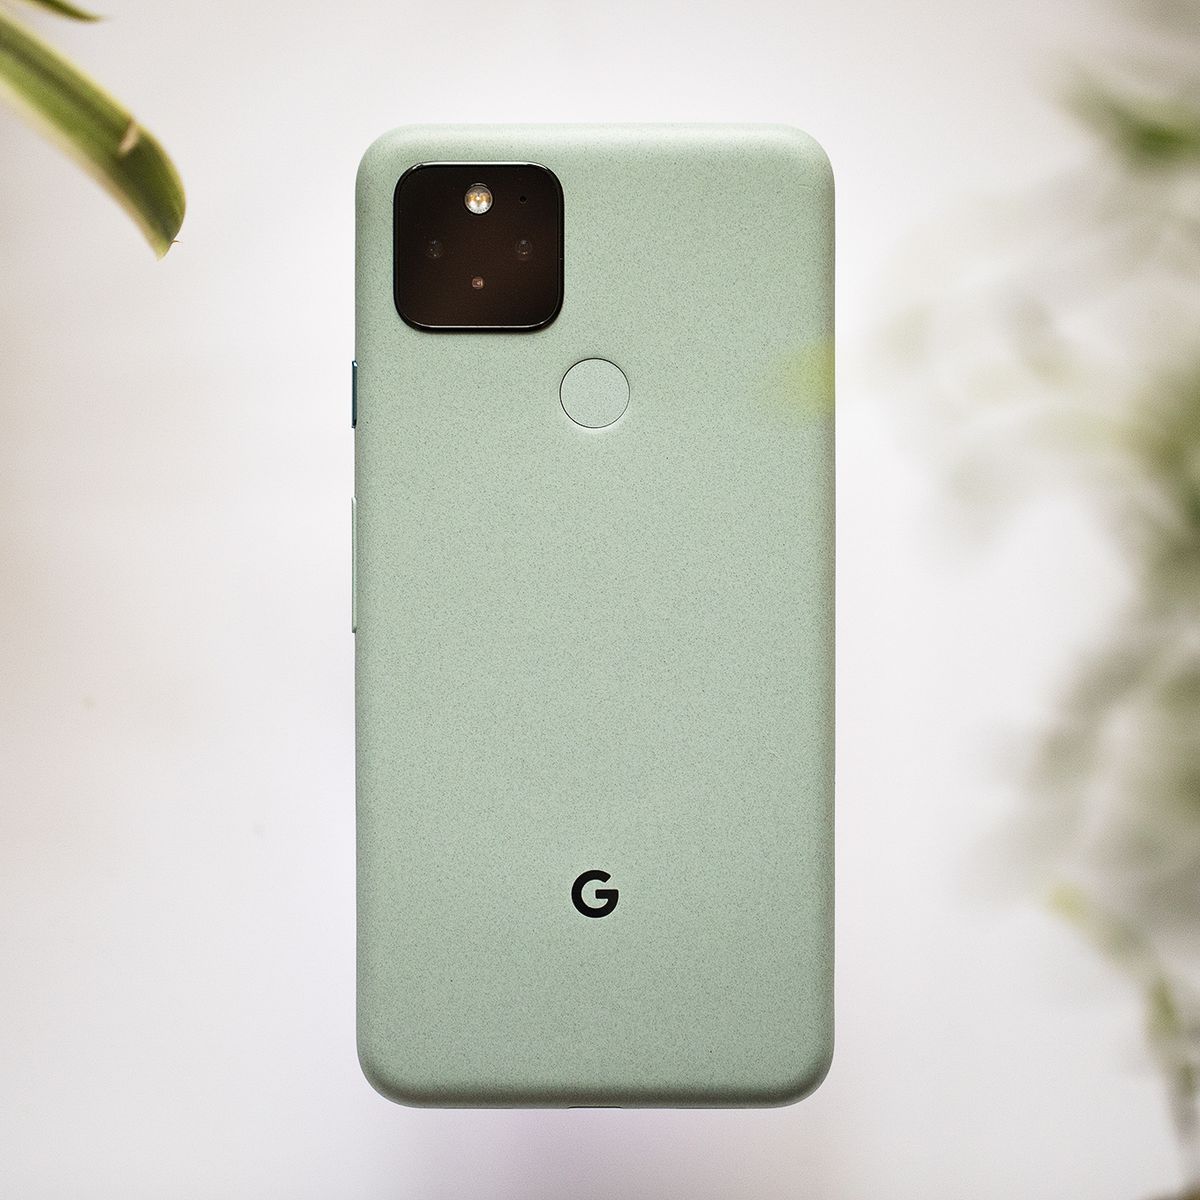 The Google Pixel 5 in “Sorta Sage” green